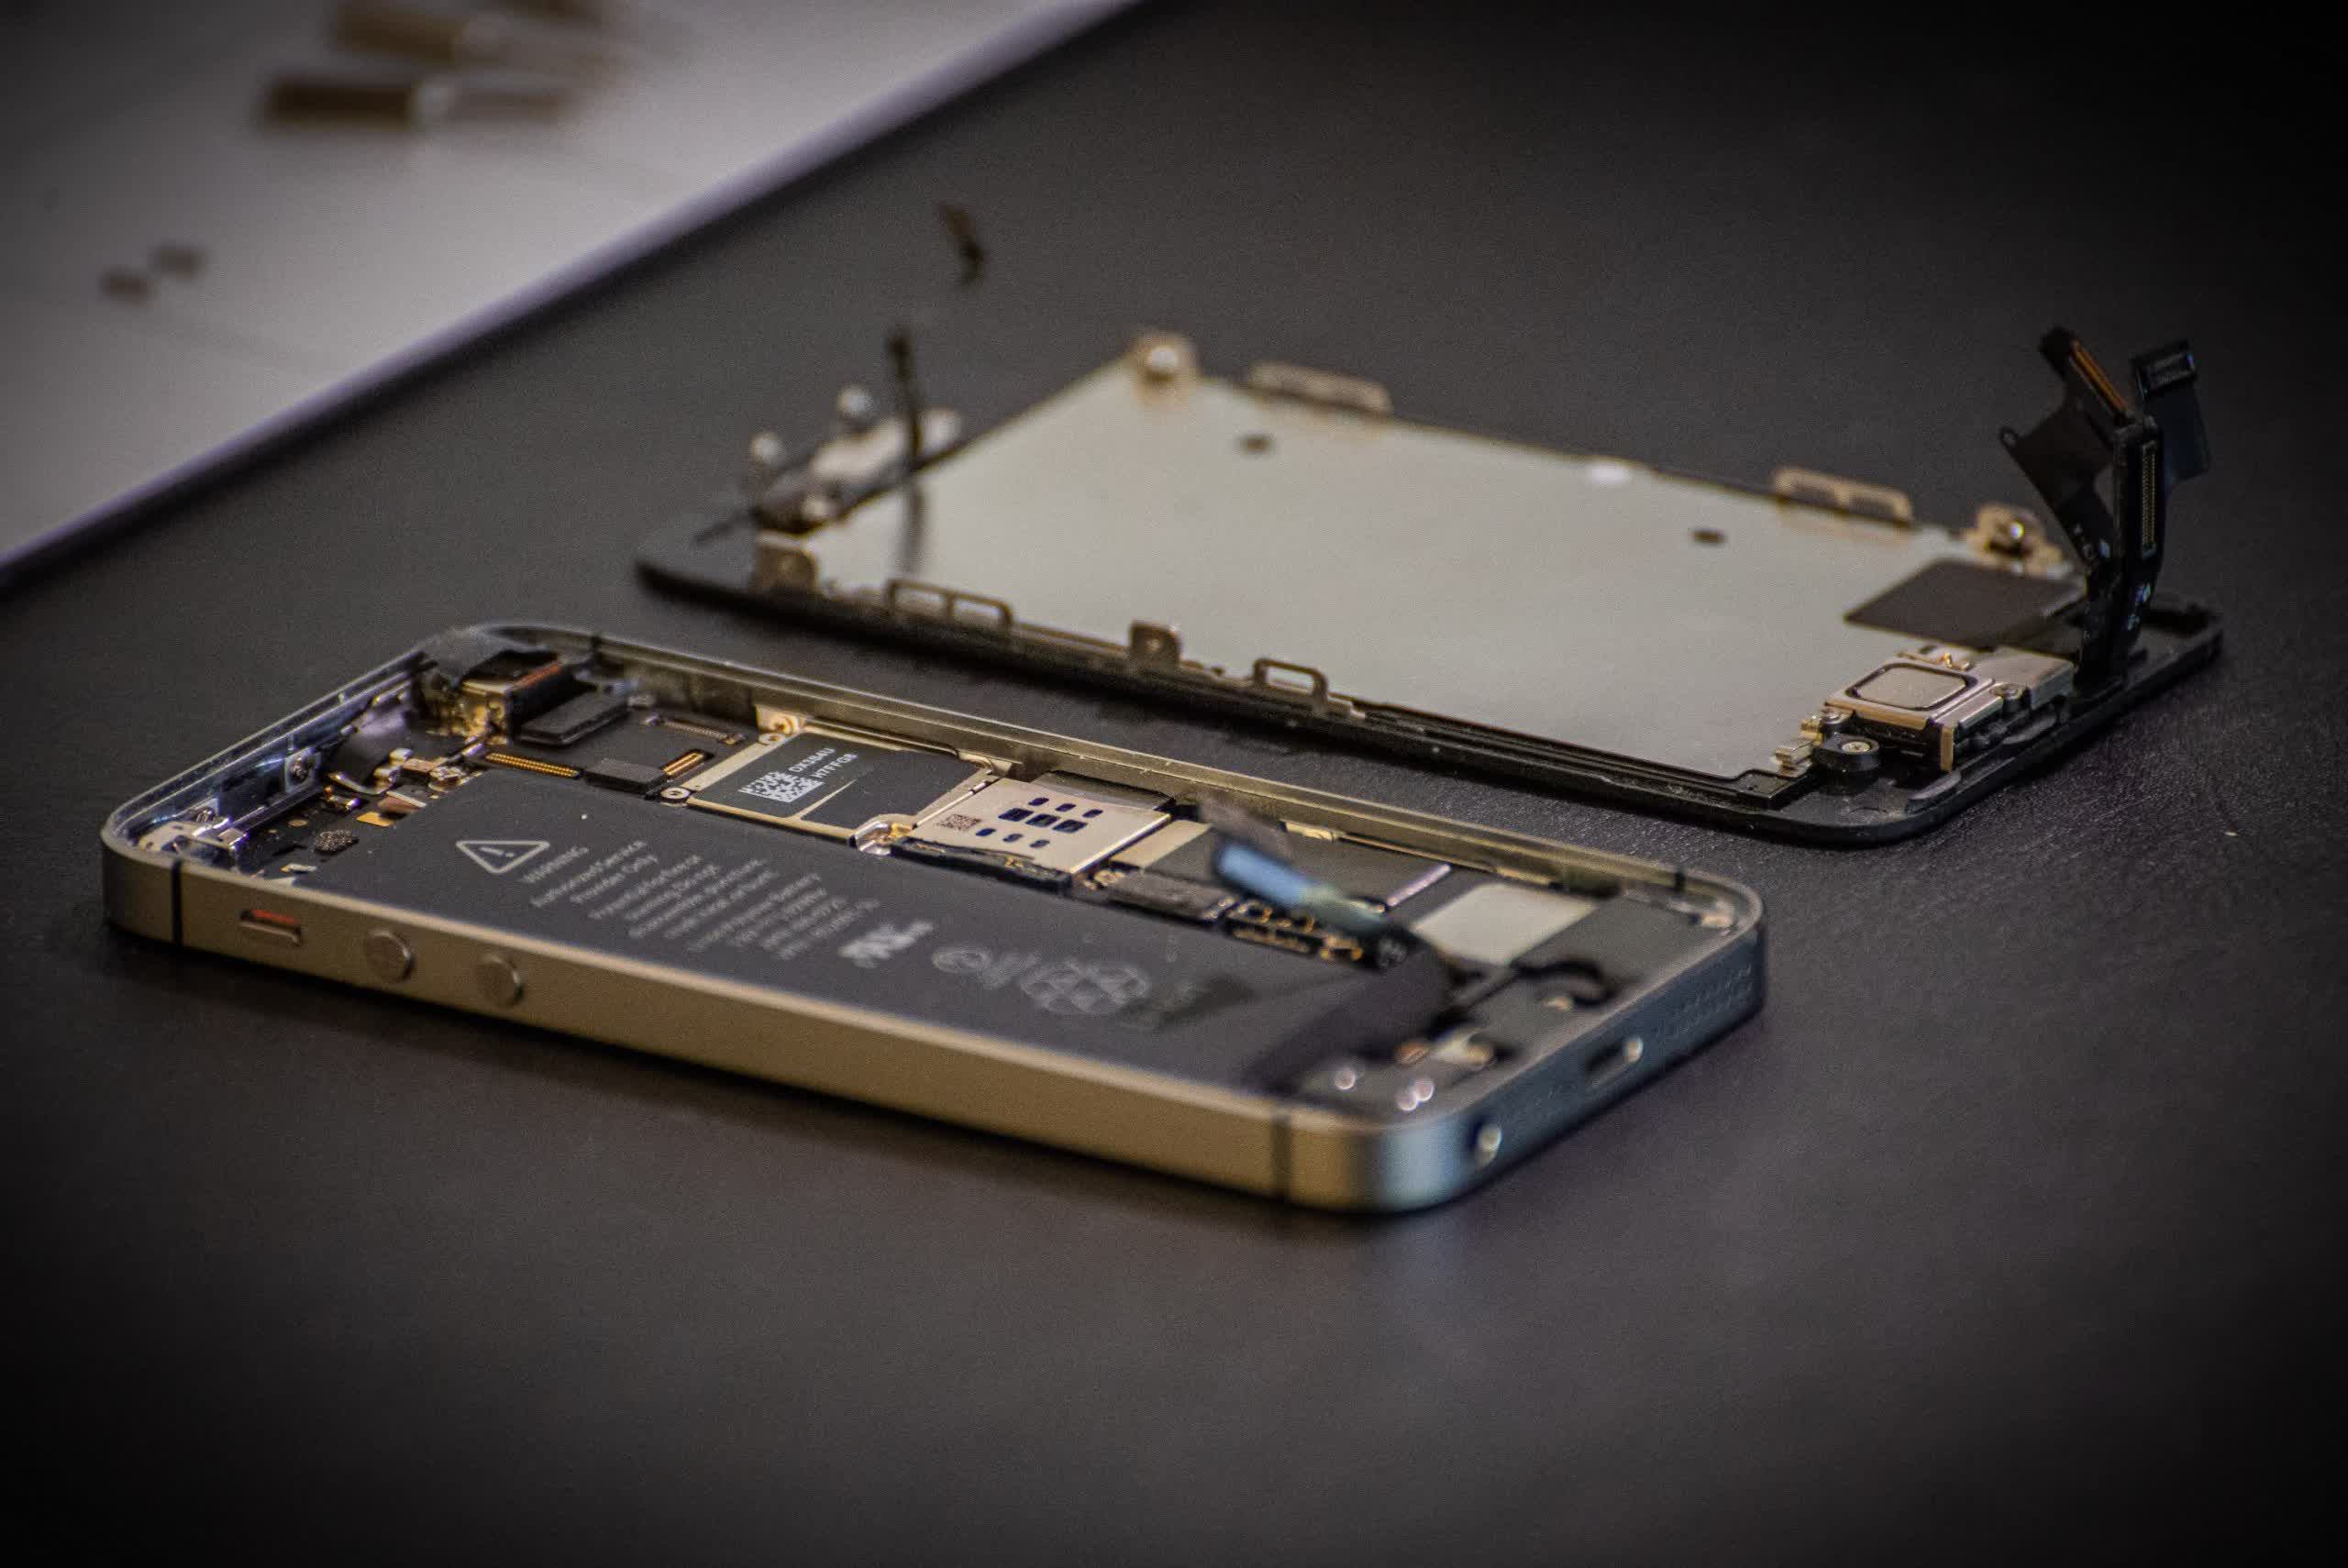 Apple will begin allowing DIY iPhone repairs in 2022